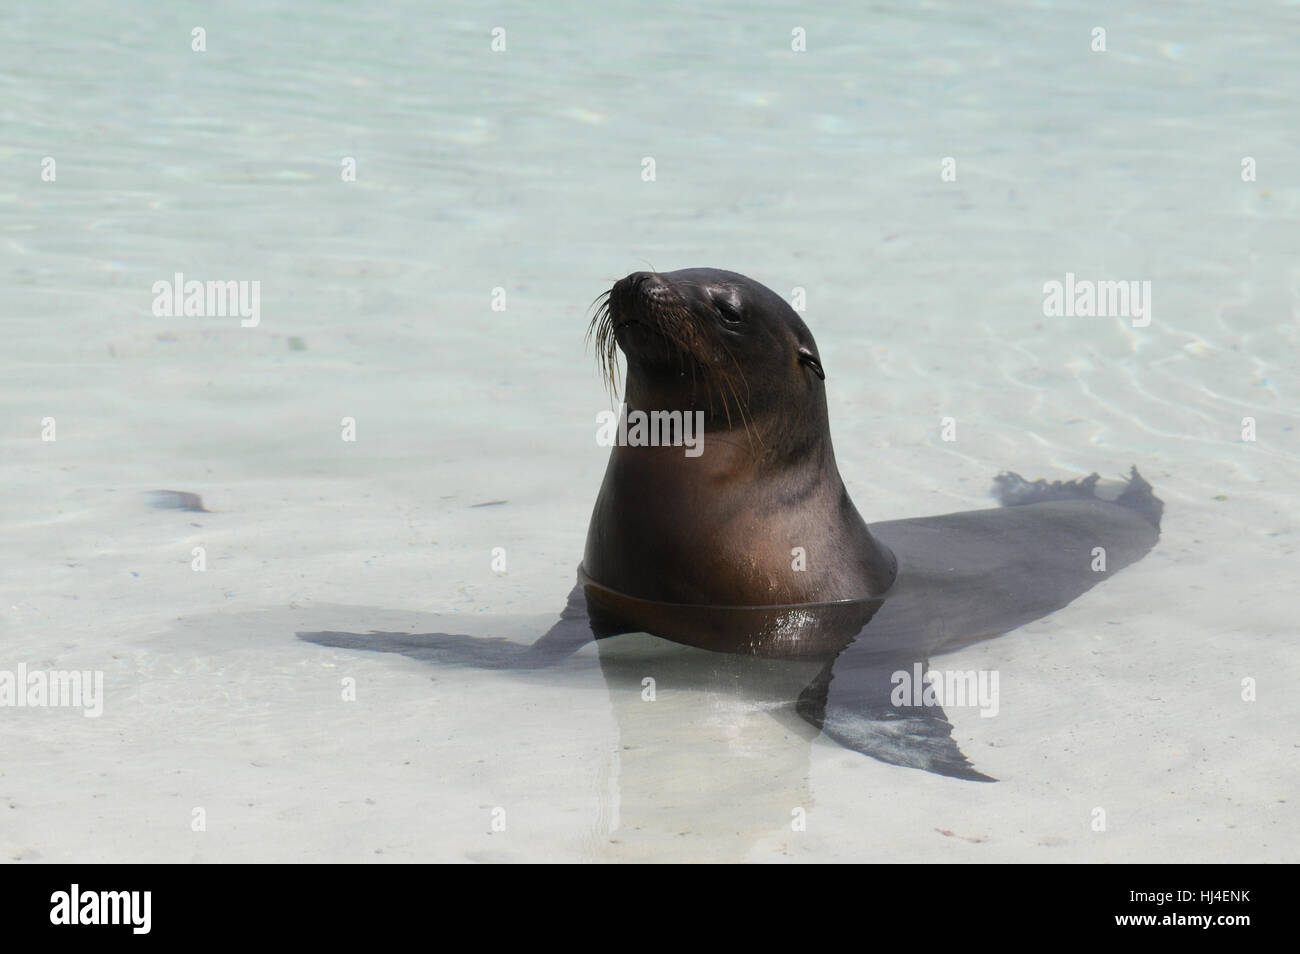 beach, seaside, the beach, seashore, seal, sandy beach, sea lion, conservation Stock Photo